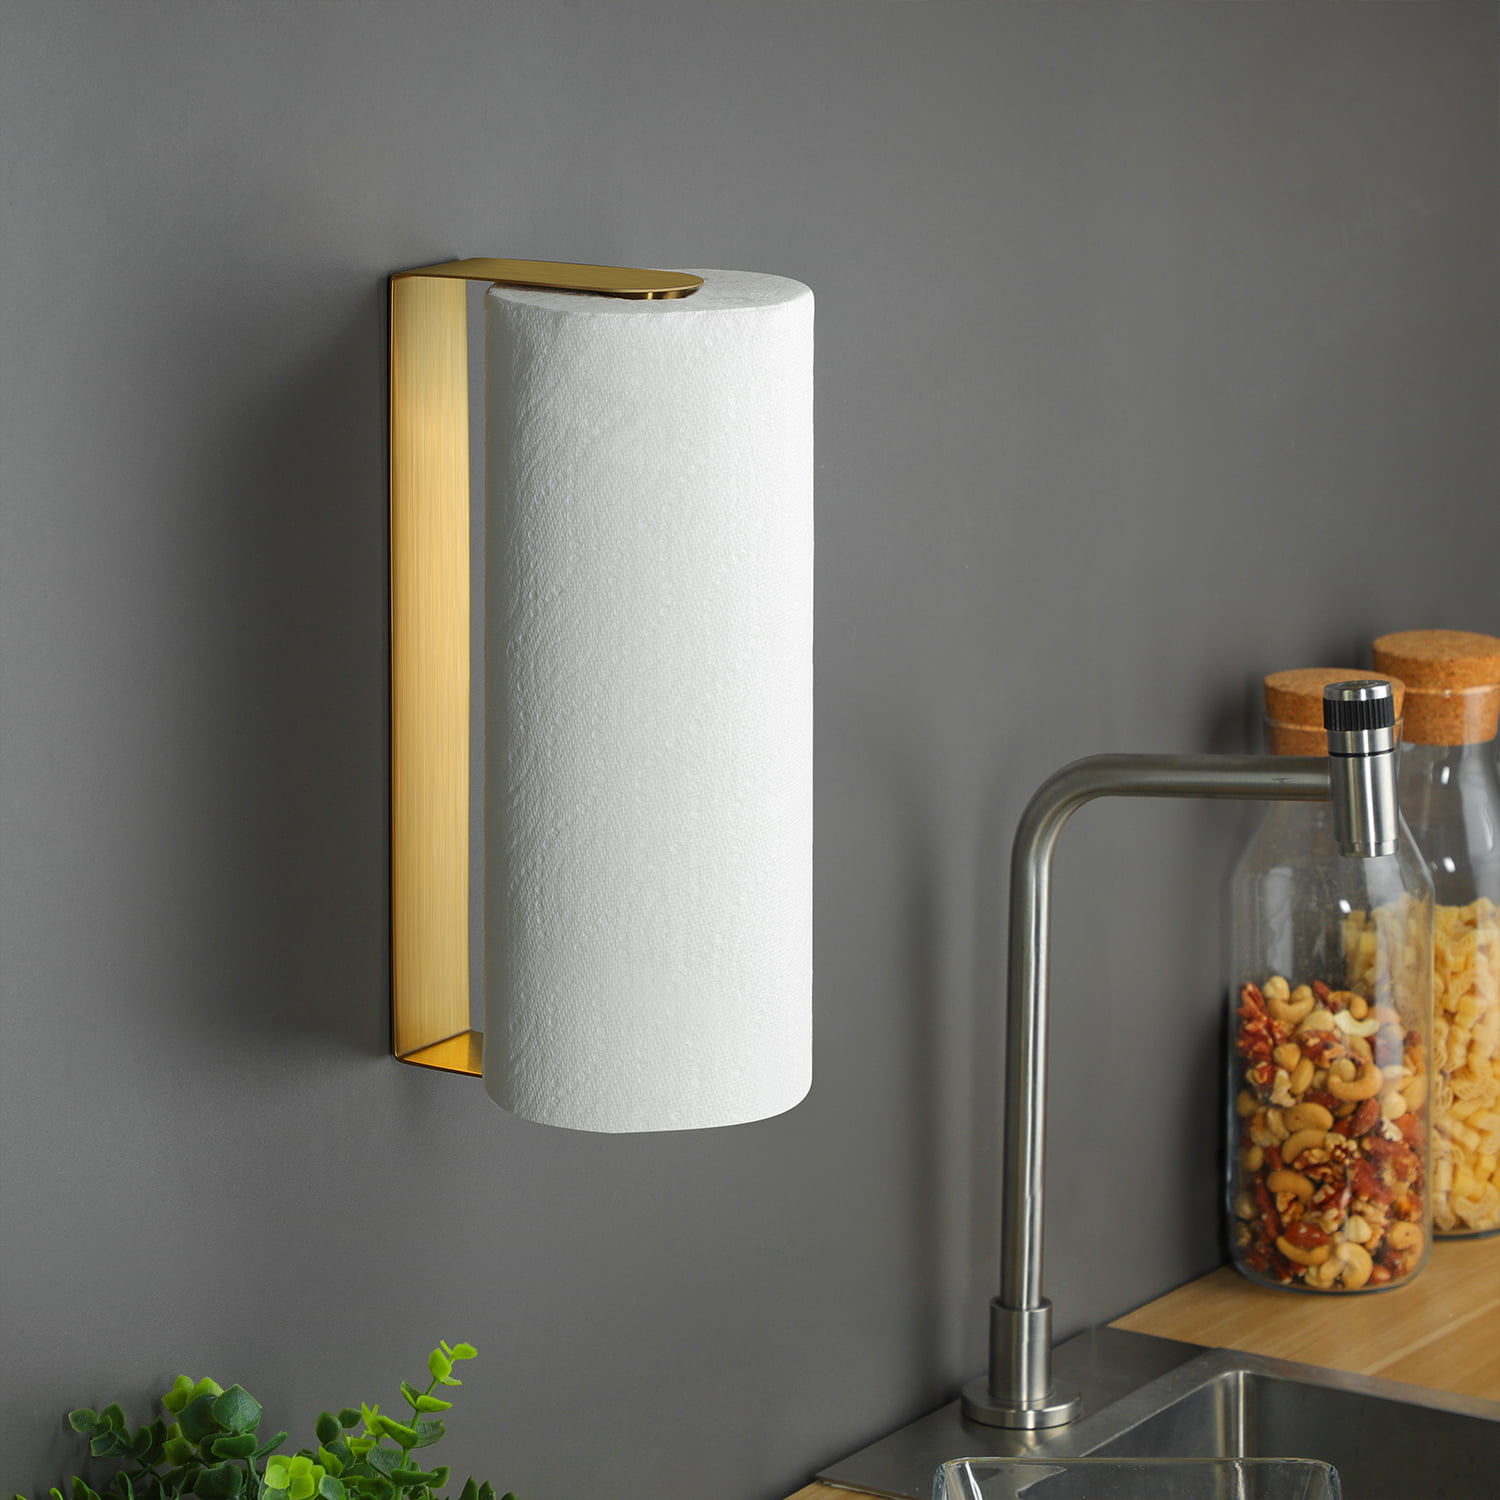 YIGII Paper Towel Holder Wall Mount KH018Y,Rustproof&Waterproof - Tools for  Kitchen & Bathroom